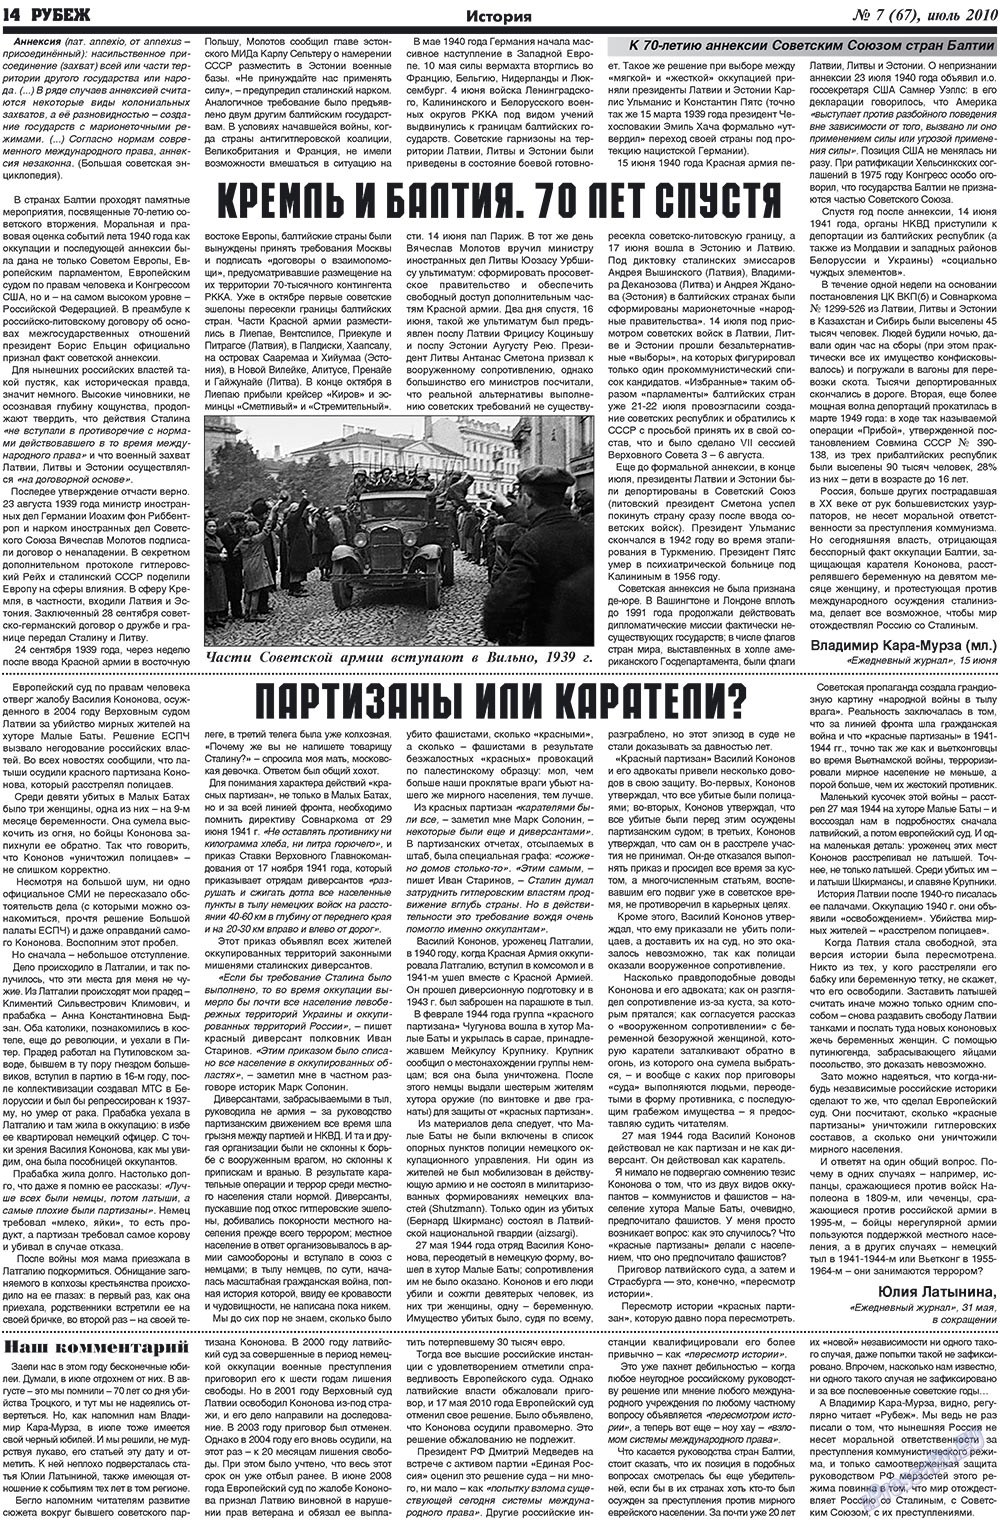 Рубеж, газета. 2010 №7 стр.14